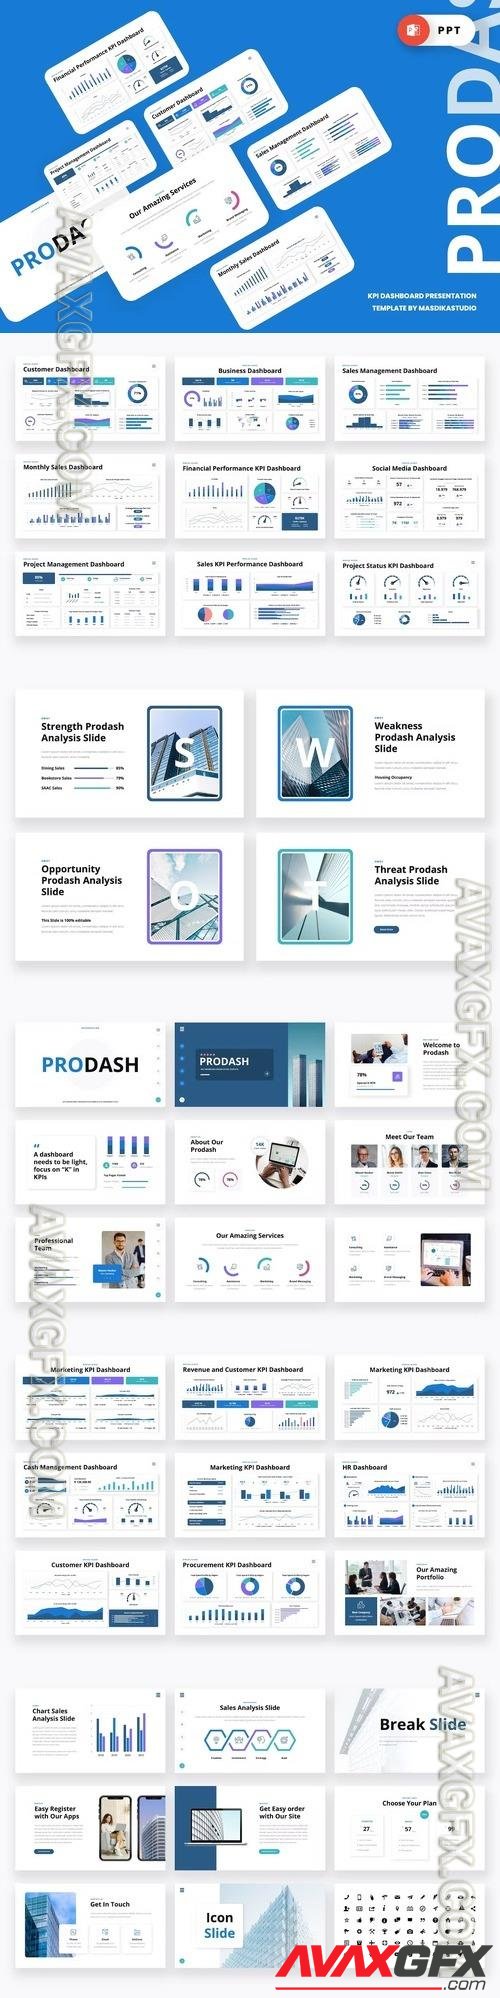 Prodash - KPI Dashboard Powerpoint Template